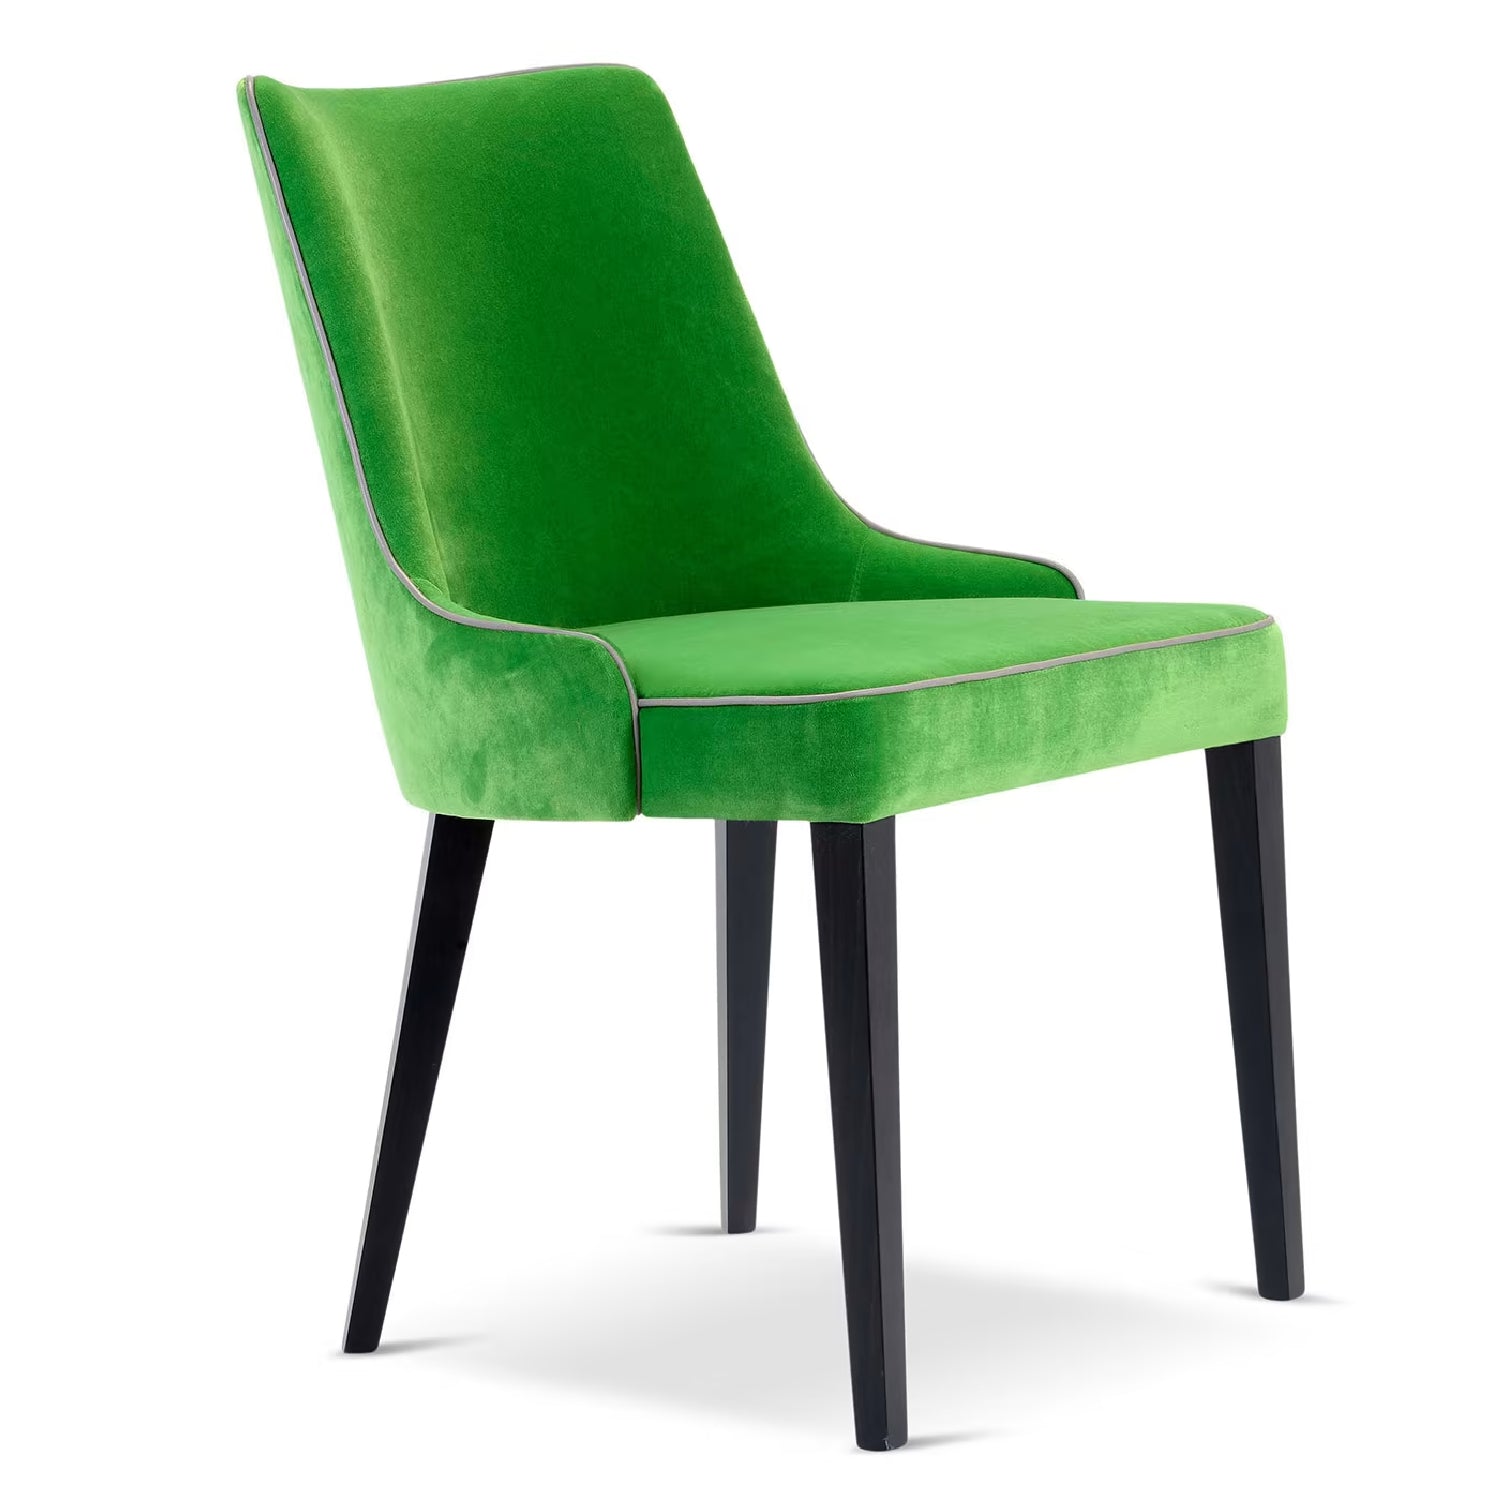 Pat Stylish Green Chair by Domingo Salotti